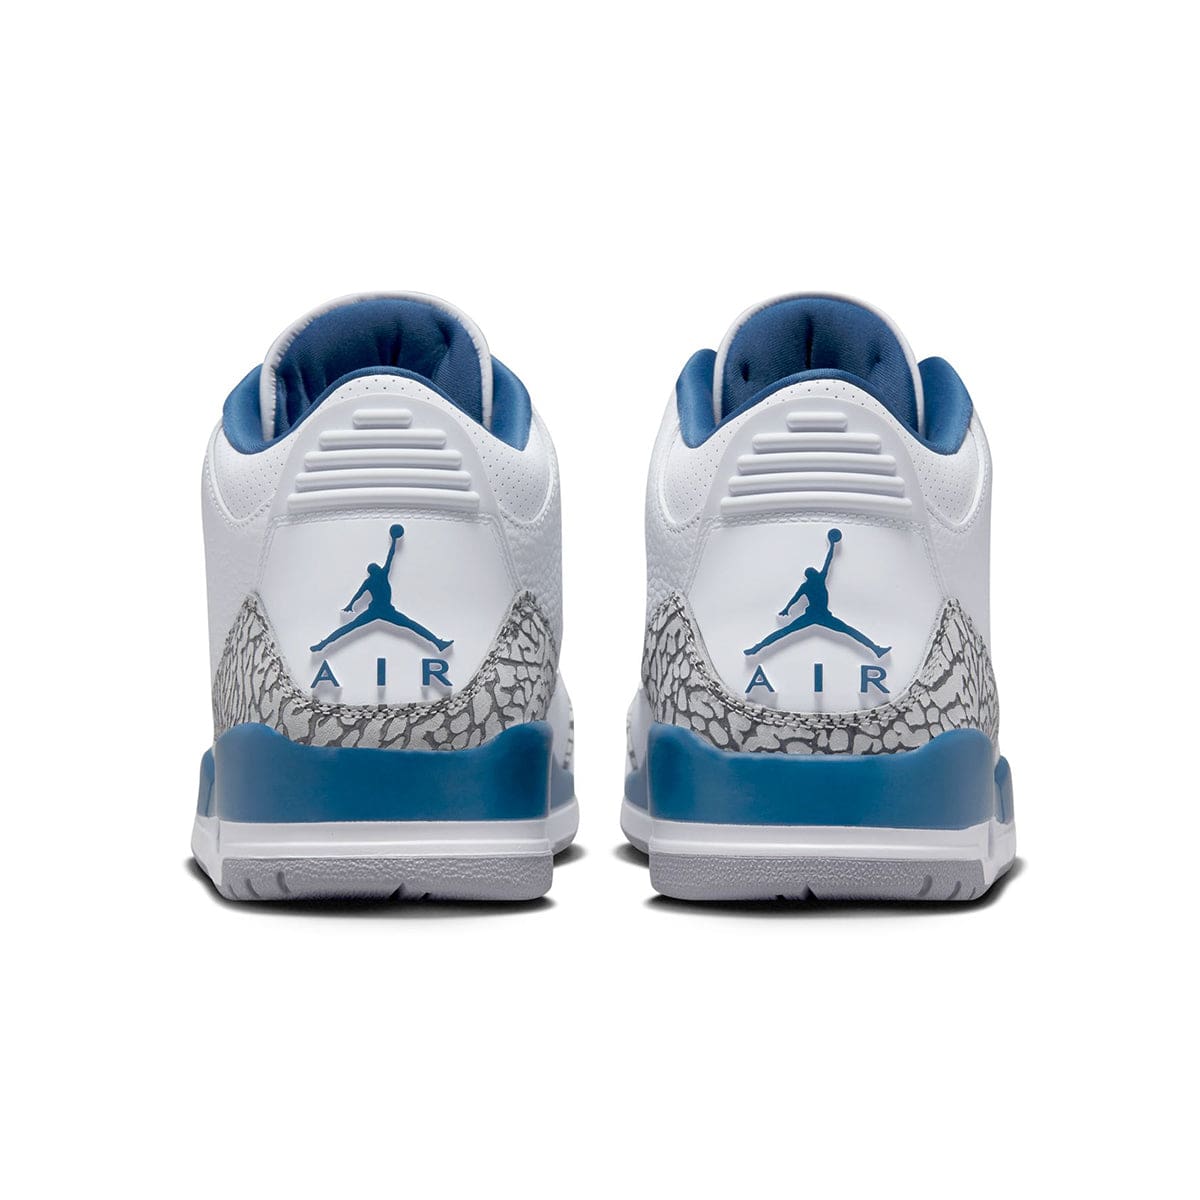 Air Jordan Sneakers AIR JORDAN 3 RETRO